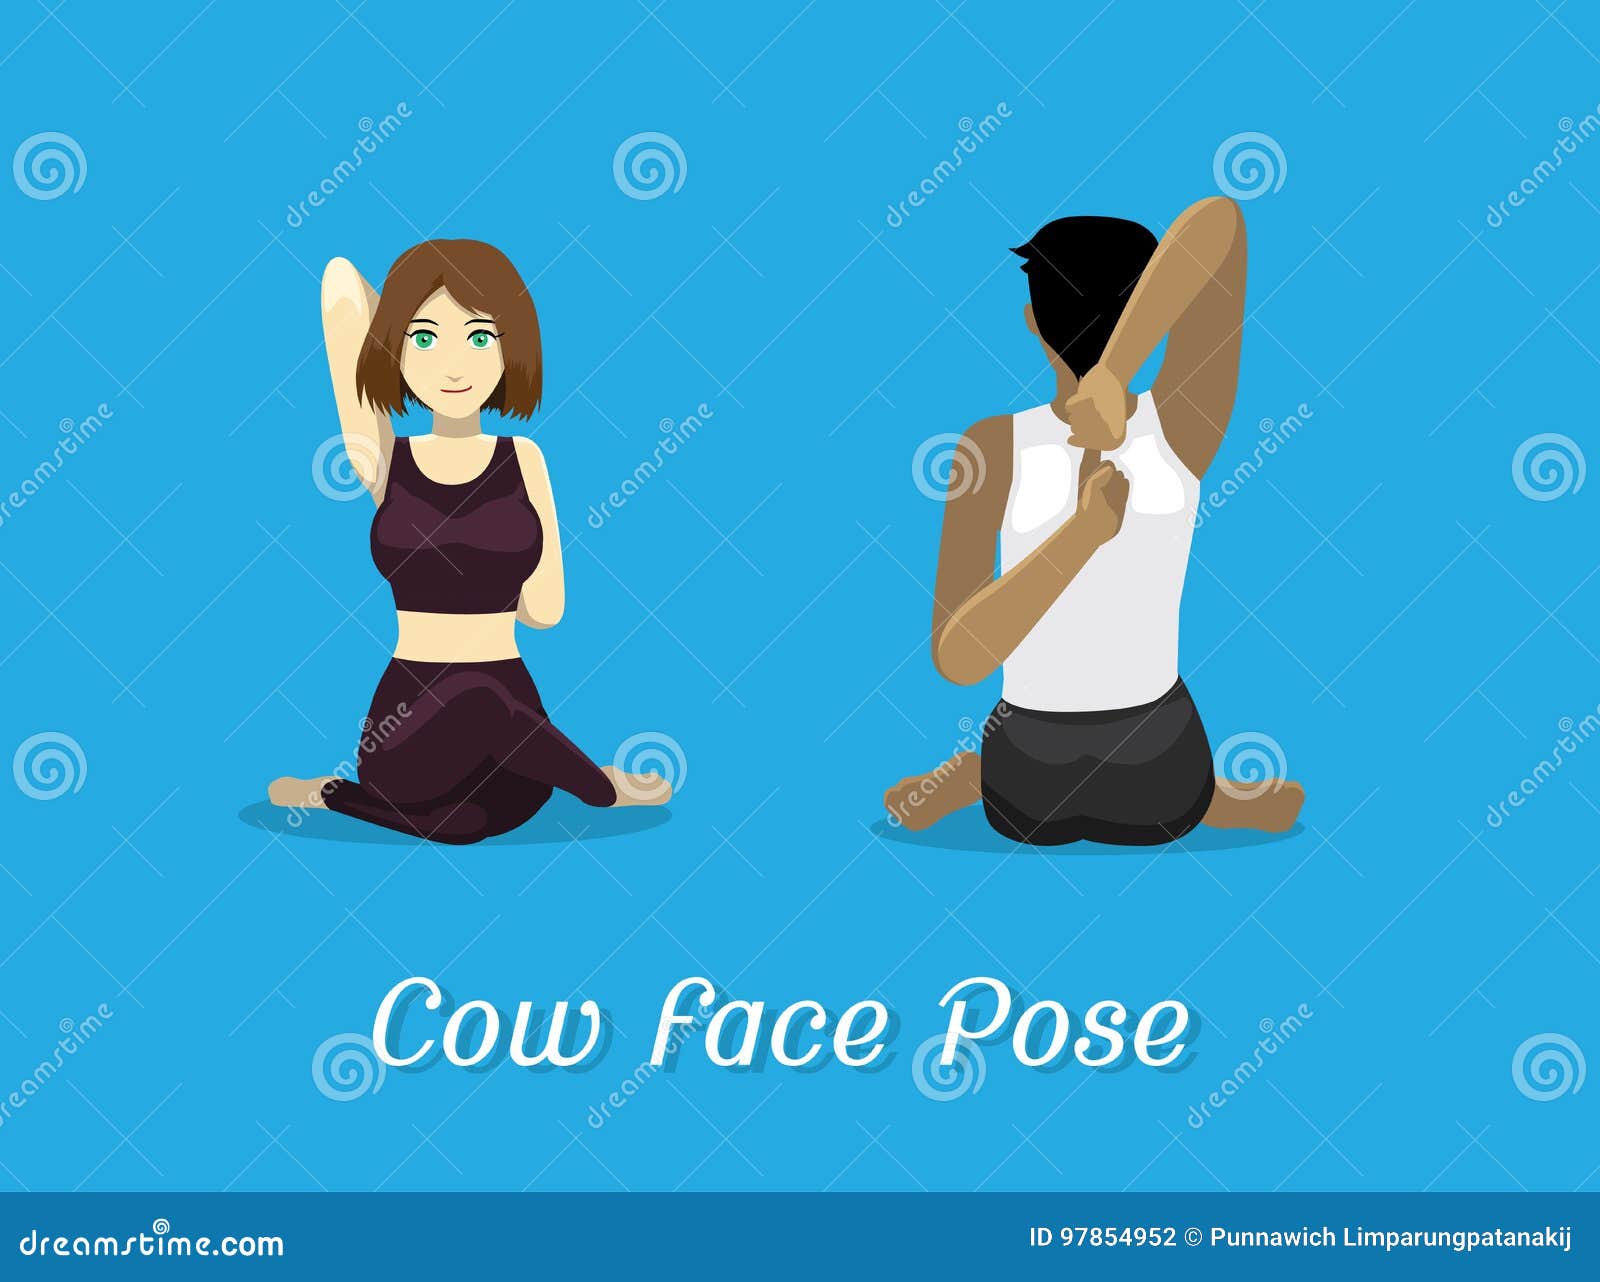 Cow Face Pose with Eagle Arms | Gomukhasana Garudasana